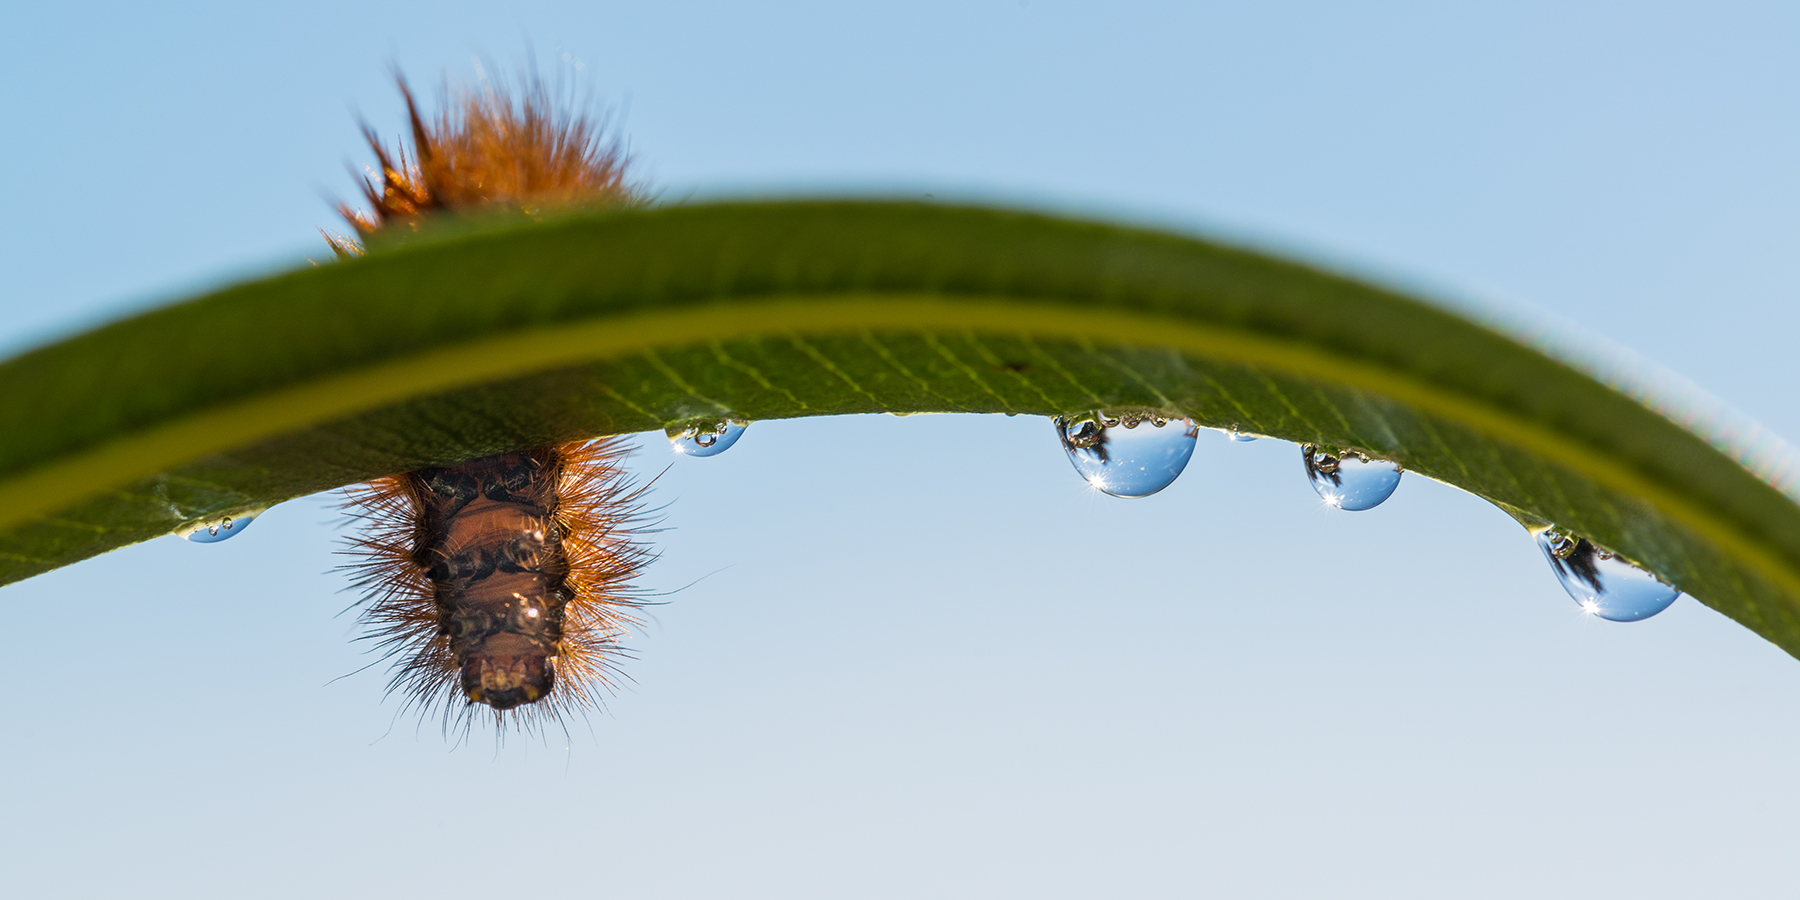 Hairy caterpillar...